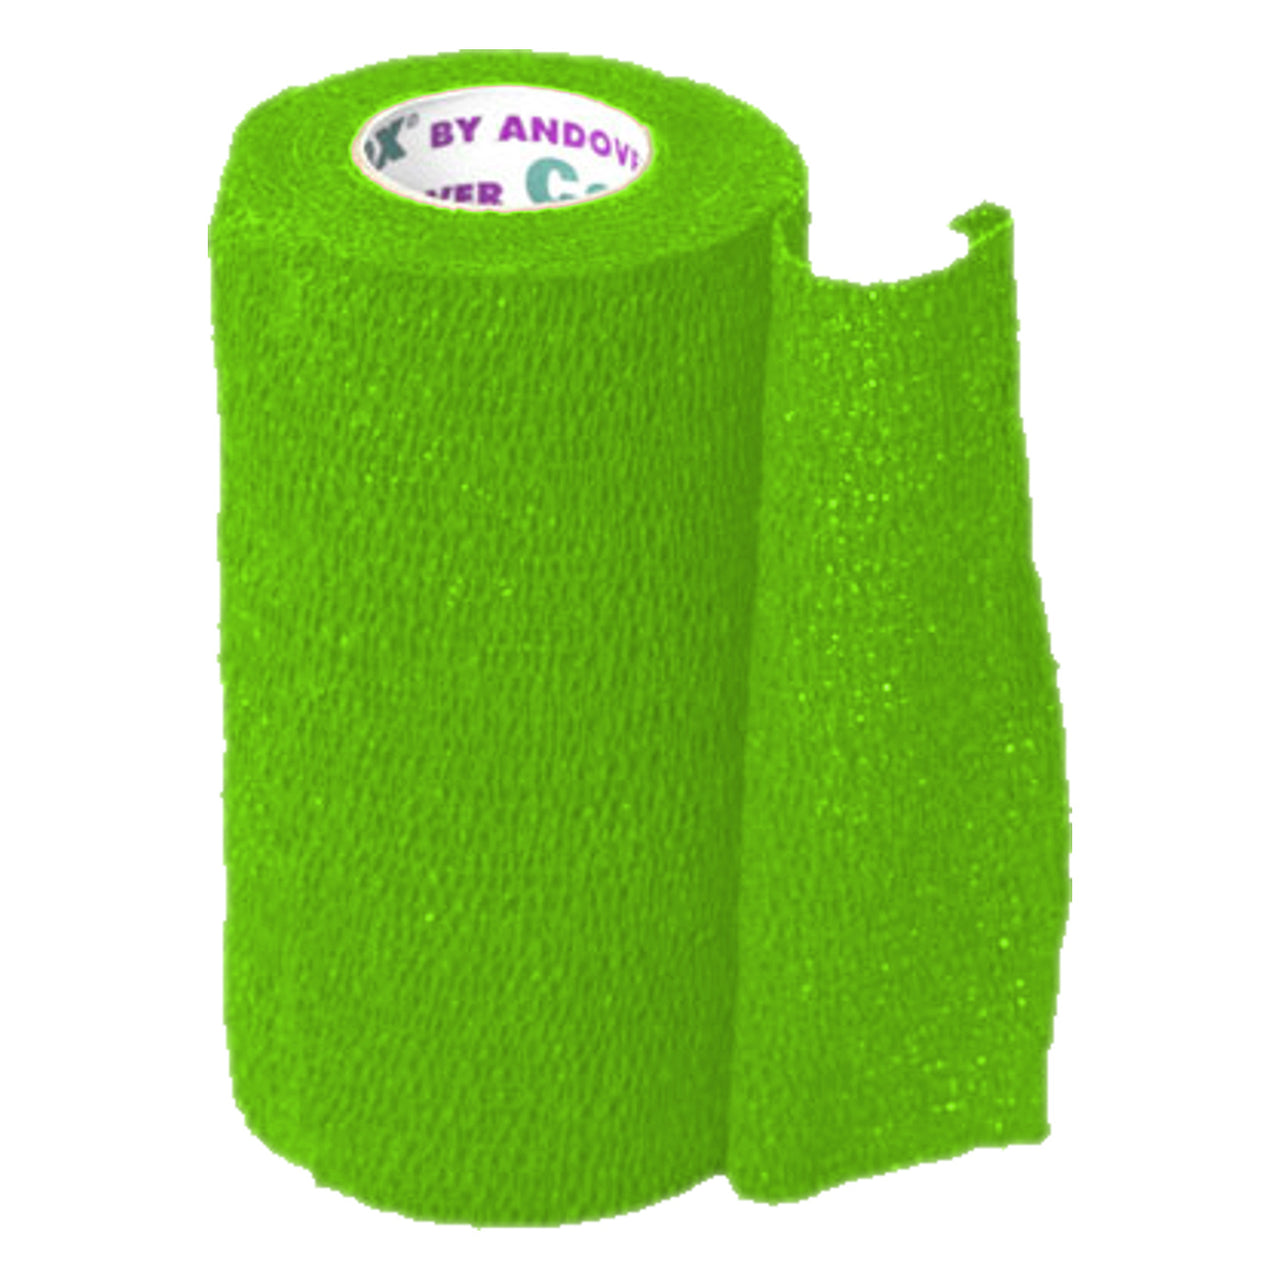 Andover Coflexvet 4X 15 Bandage (Neon Green) - Wound Dressing Andover - Canada